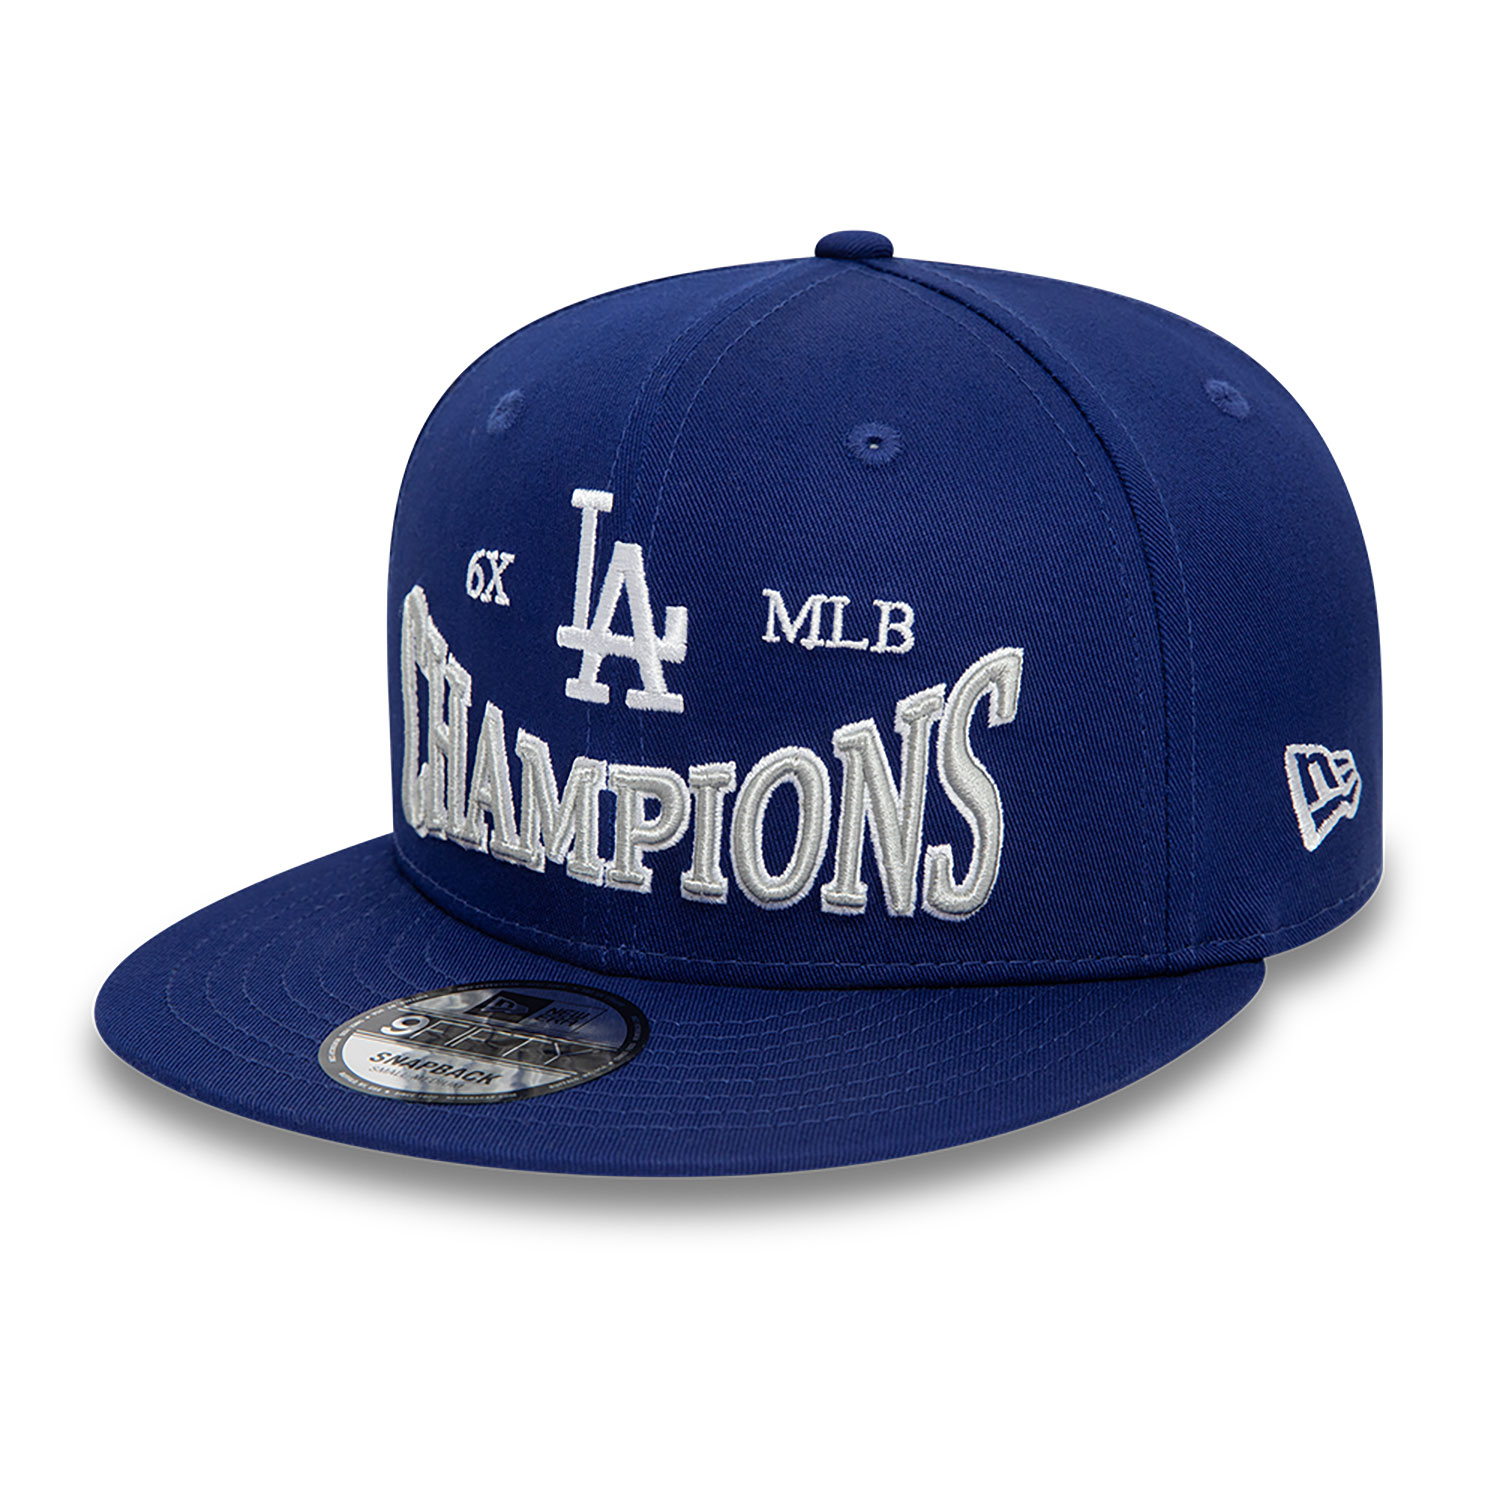 Los Angeles Dodgers 2020 World Series Championship (Blue) Snapback